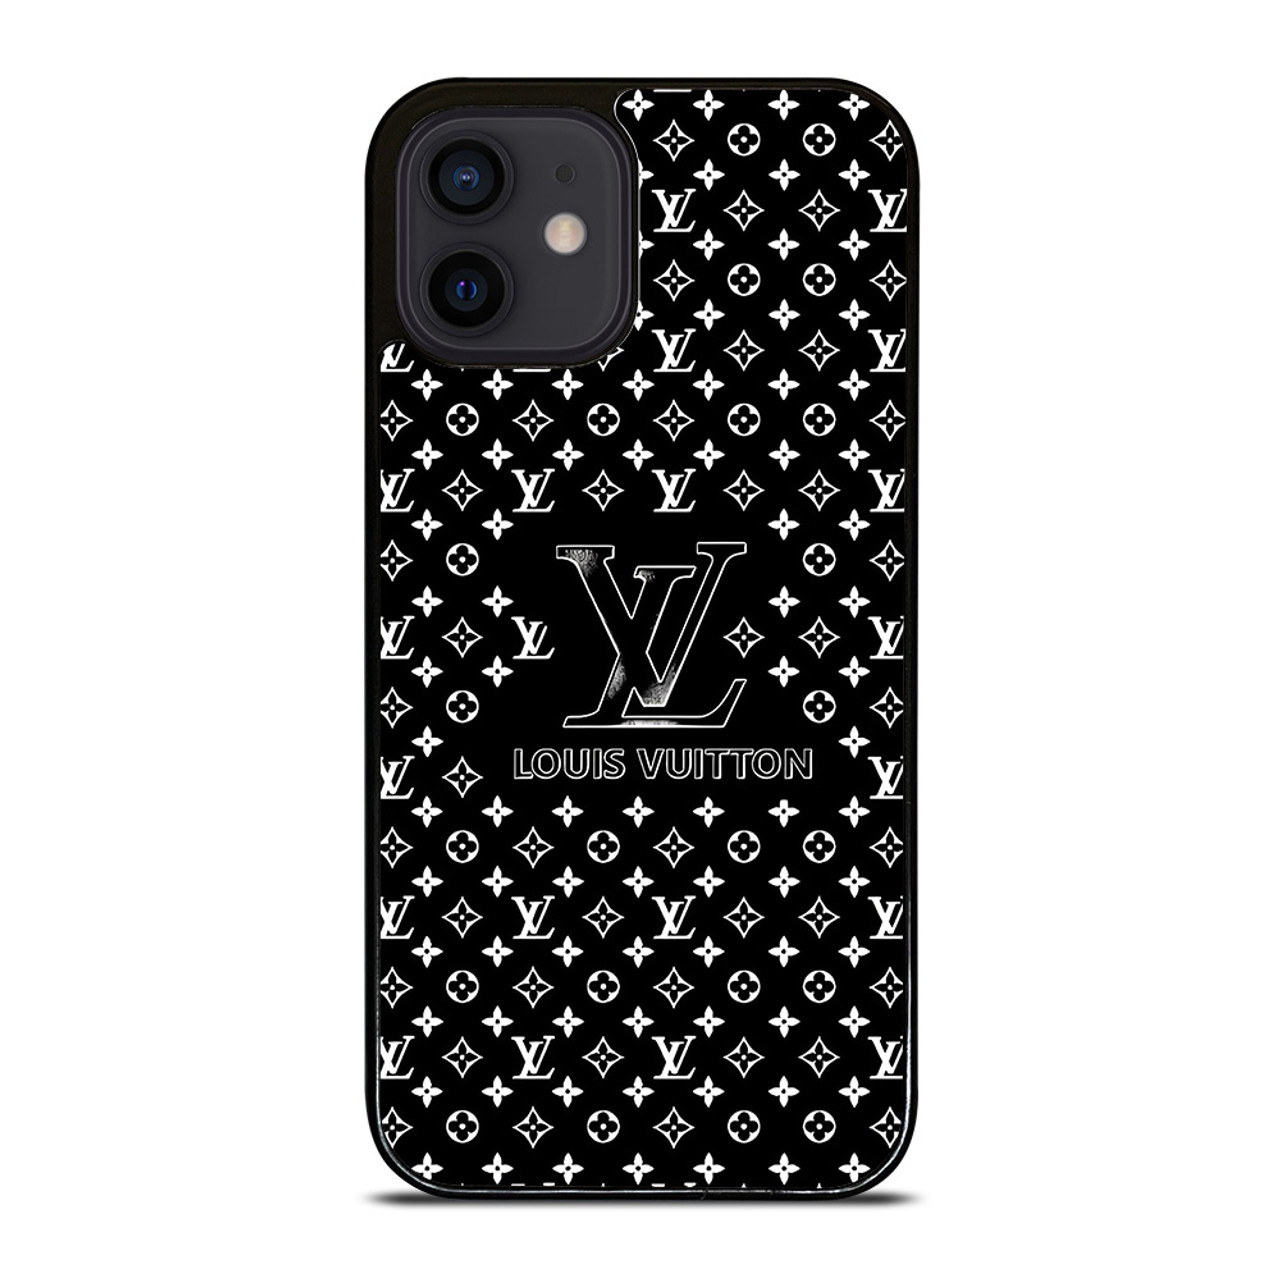 LOUIS VUITTON 1 iPhone 12 Mini Case Cover